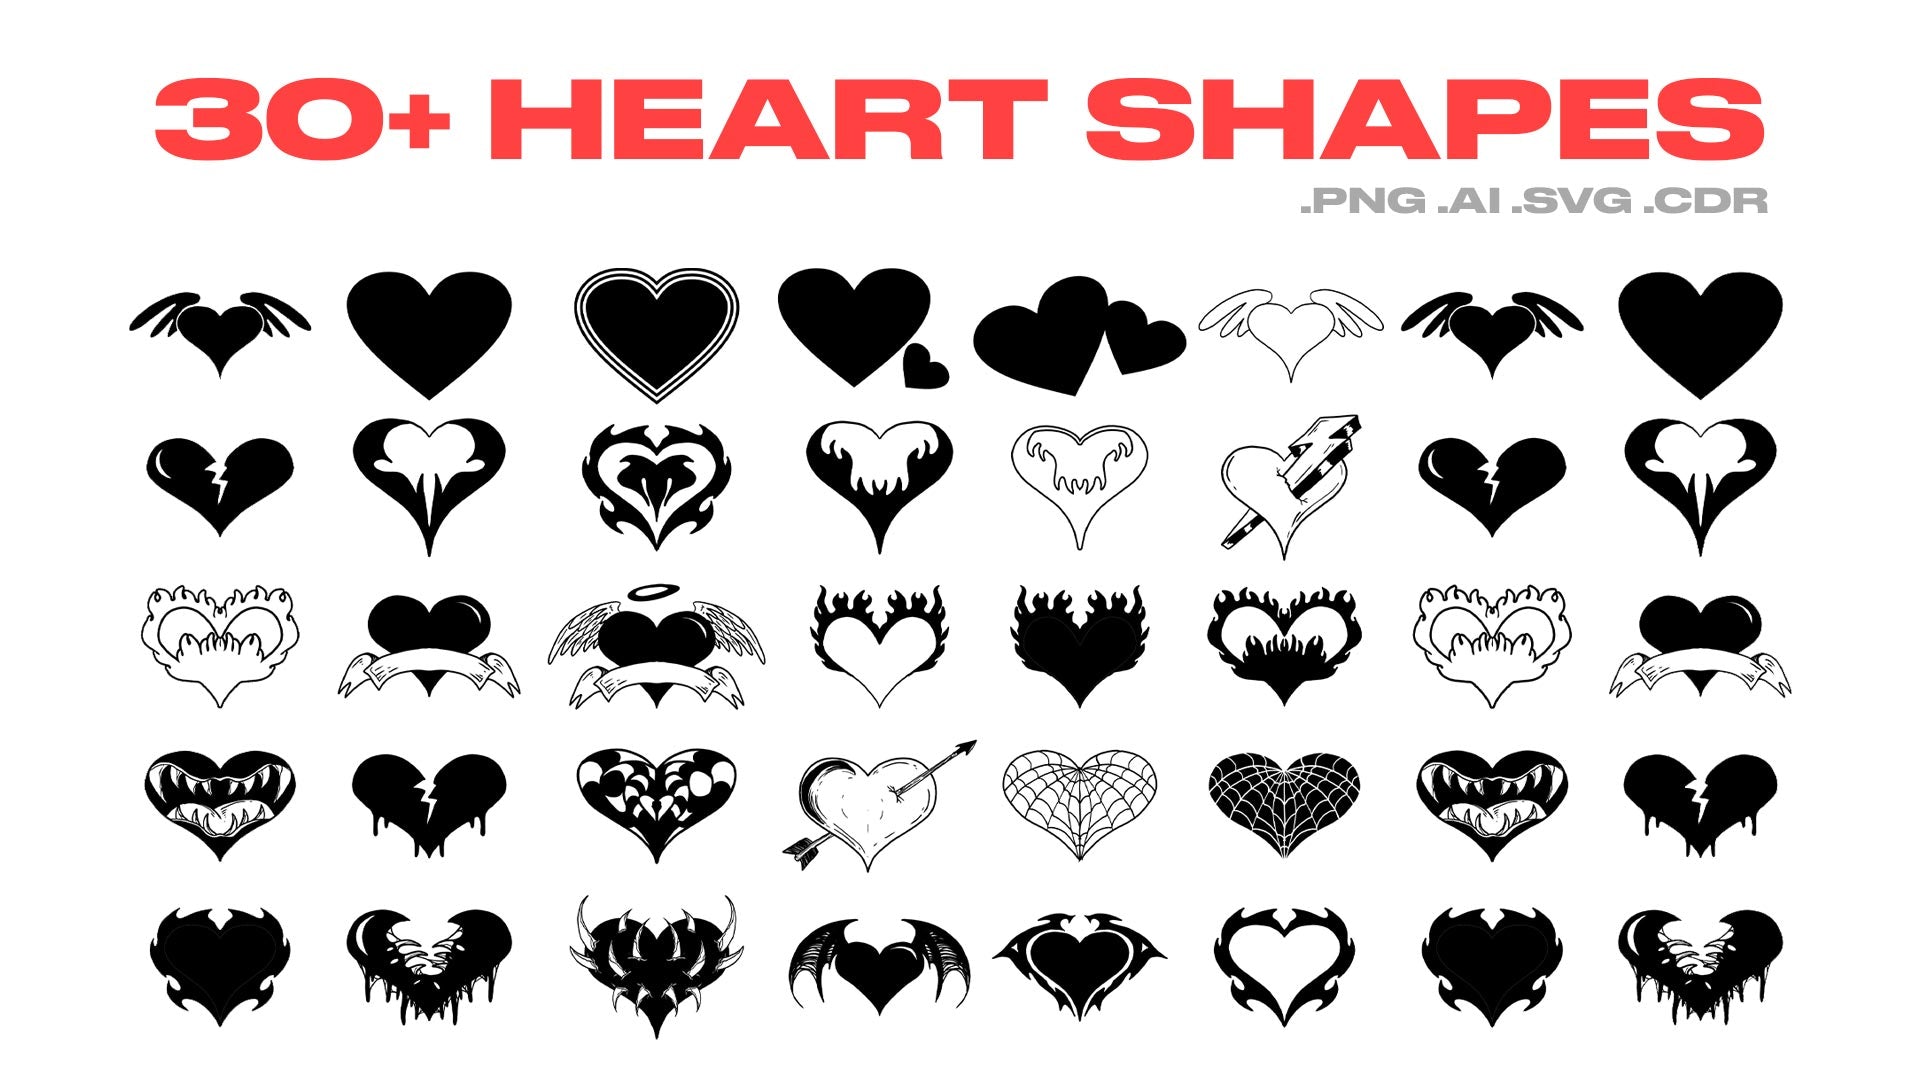 Heart Vectors & Shapes Pack v1.0